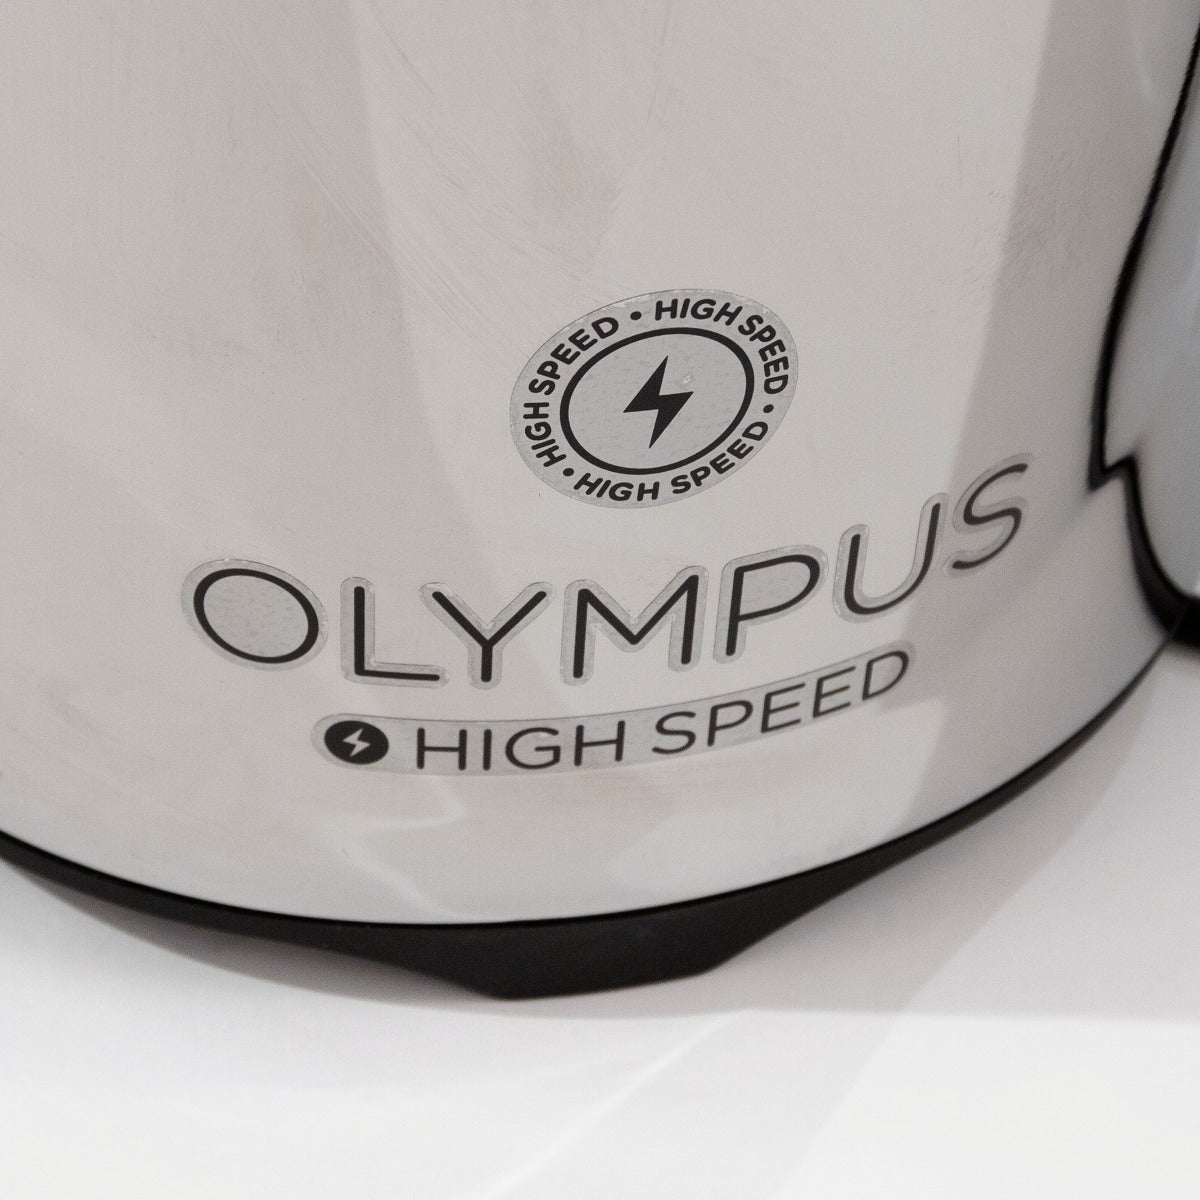 "OLYMPUS HIGH SPEED" logo on the base